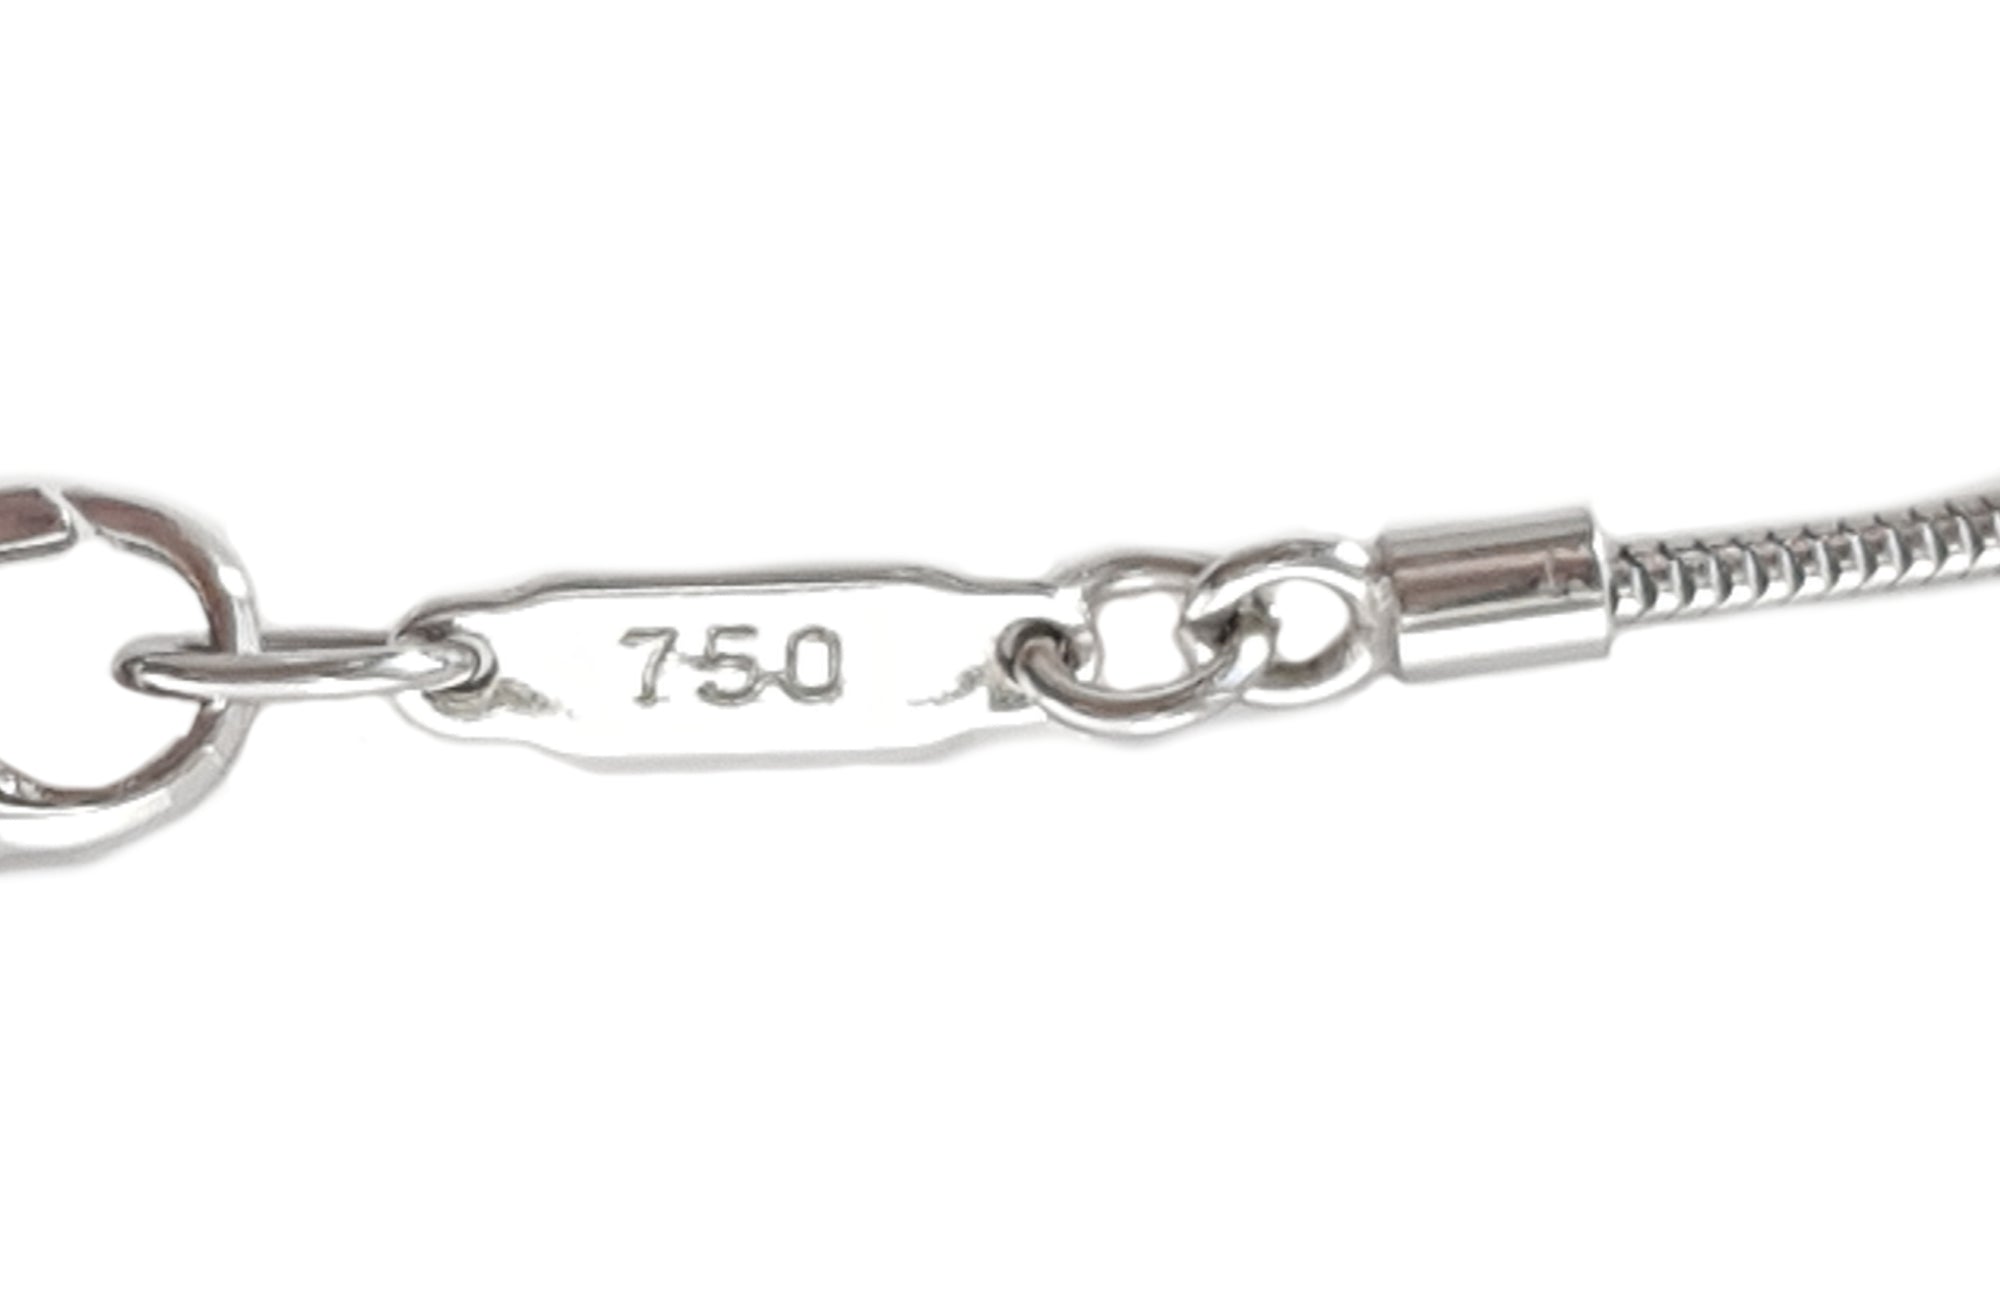 Tiffany & Co .10ct Diamond Atlas Pendant 750 (Gold) Snake Chain 16"